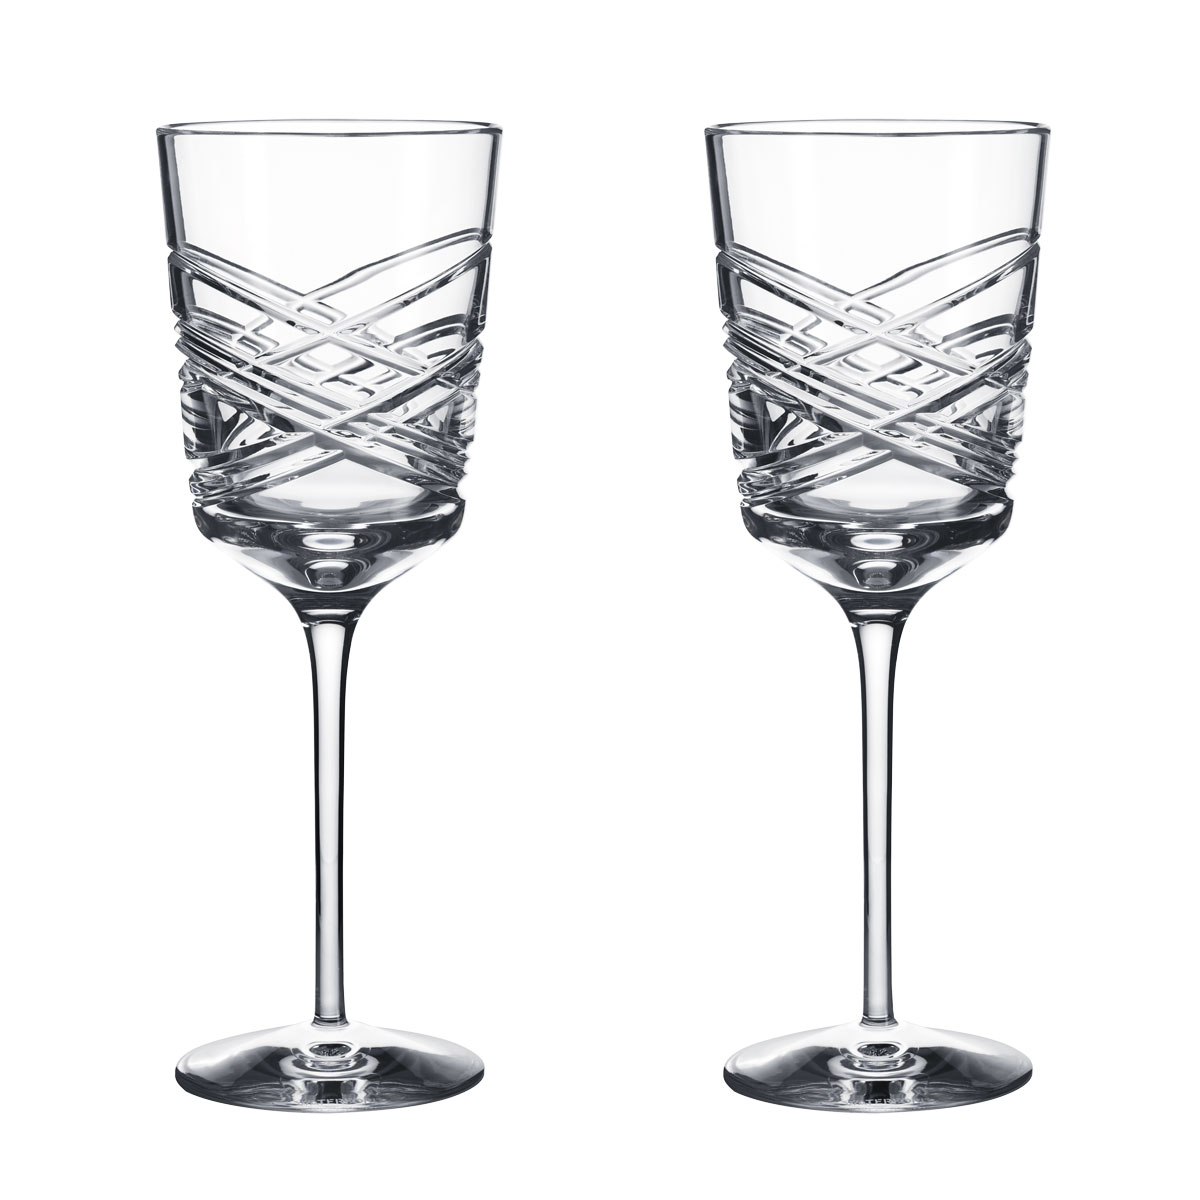 Waterford Aran White Wine Glasses, Pair